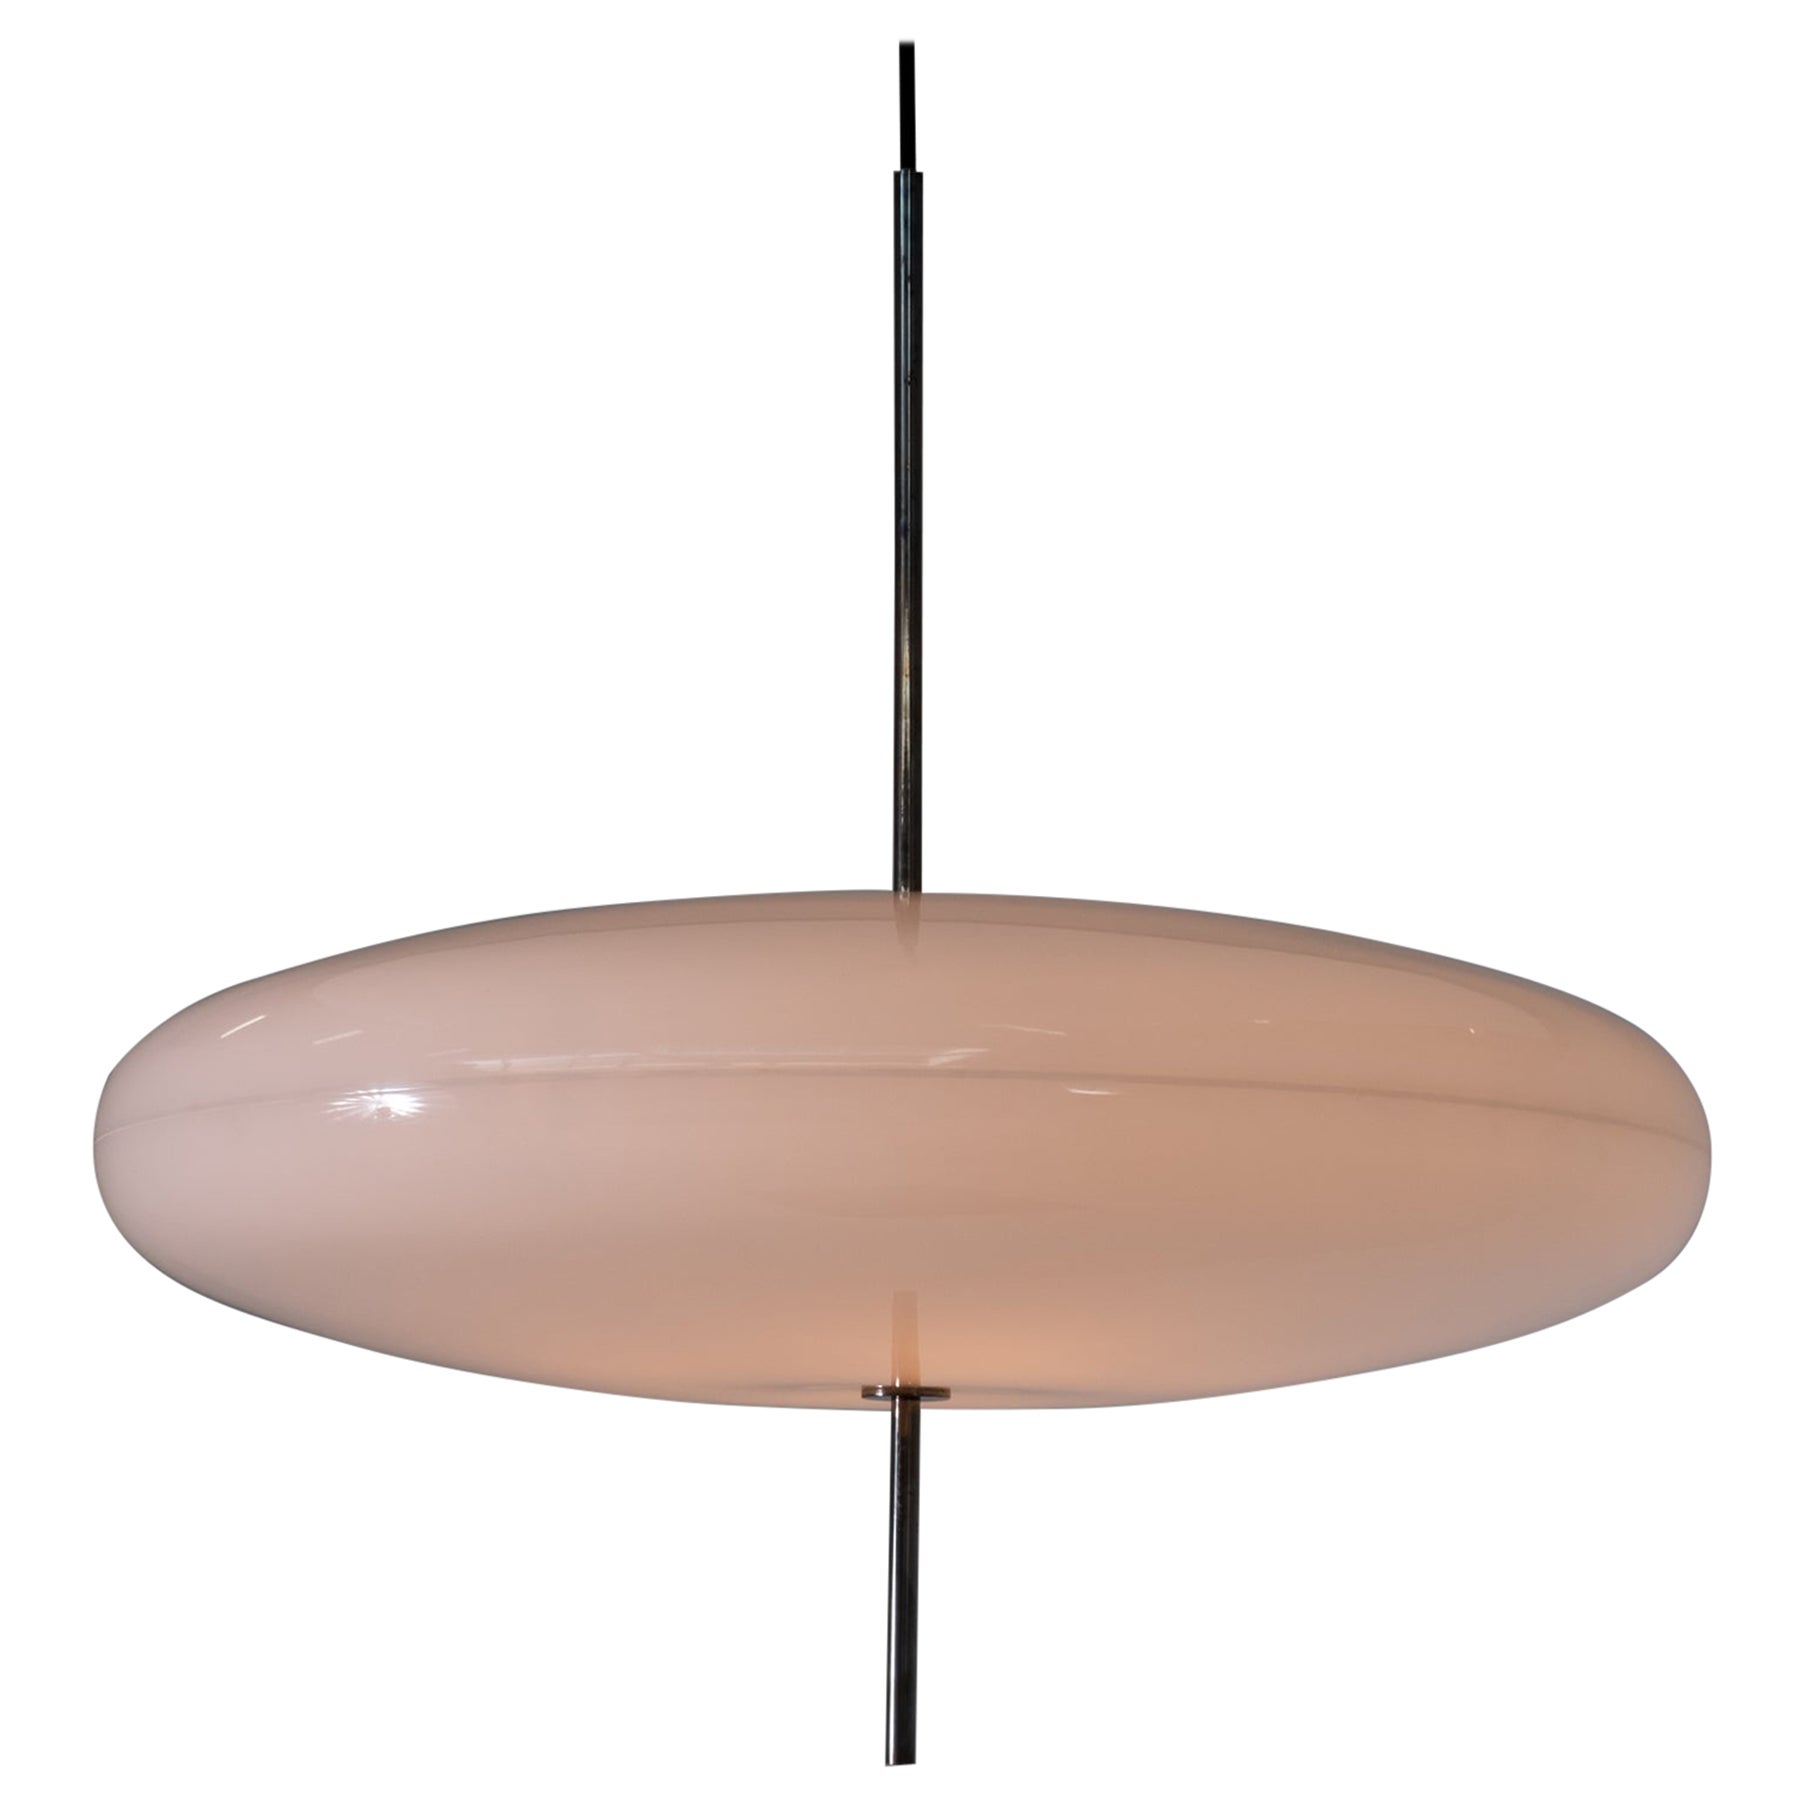 Gino Sarfatti Mod. 2065 GF Ceiling Lamp for Arteluce, Italy 1950s